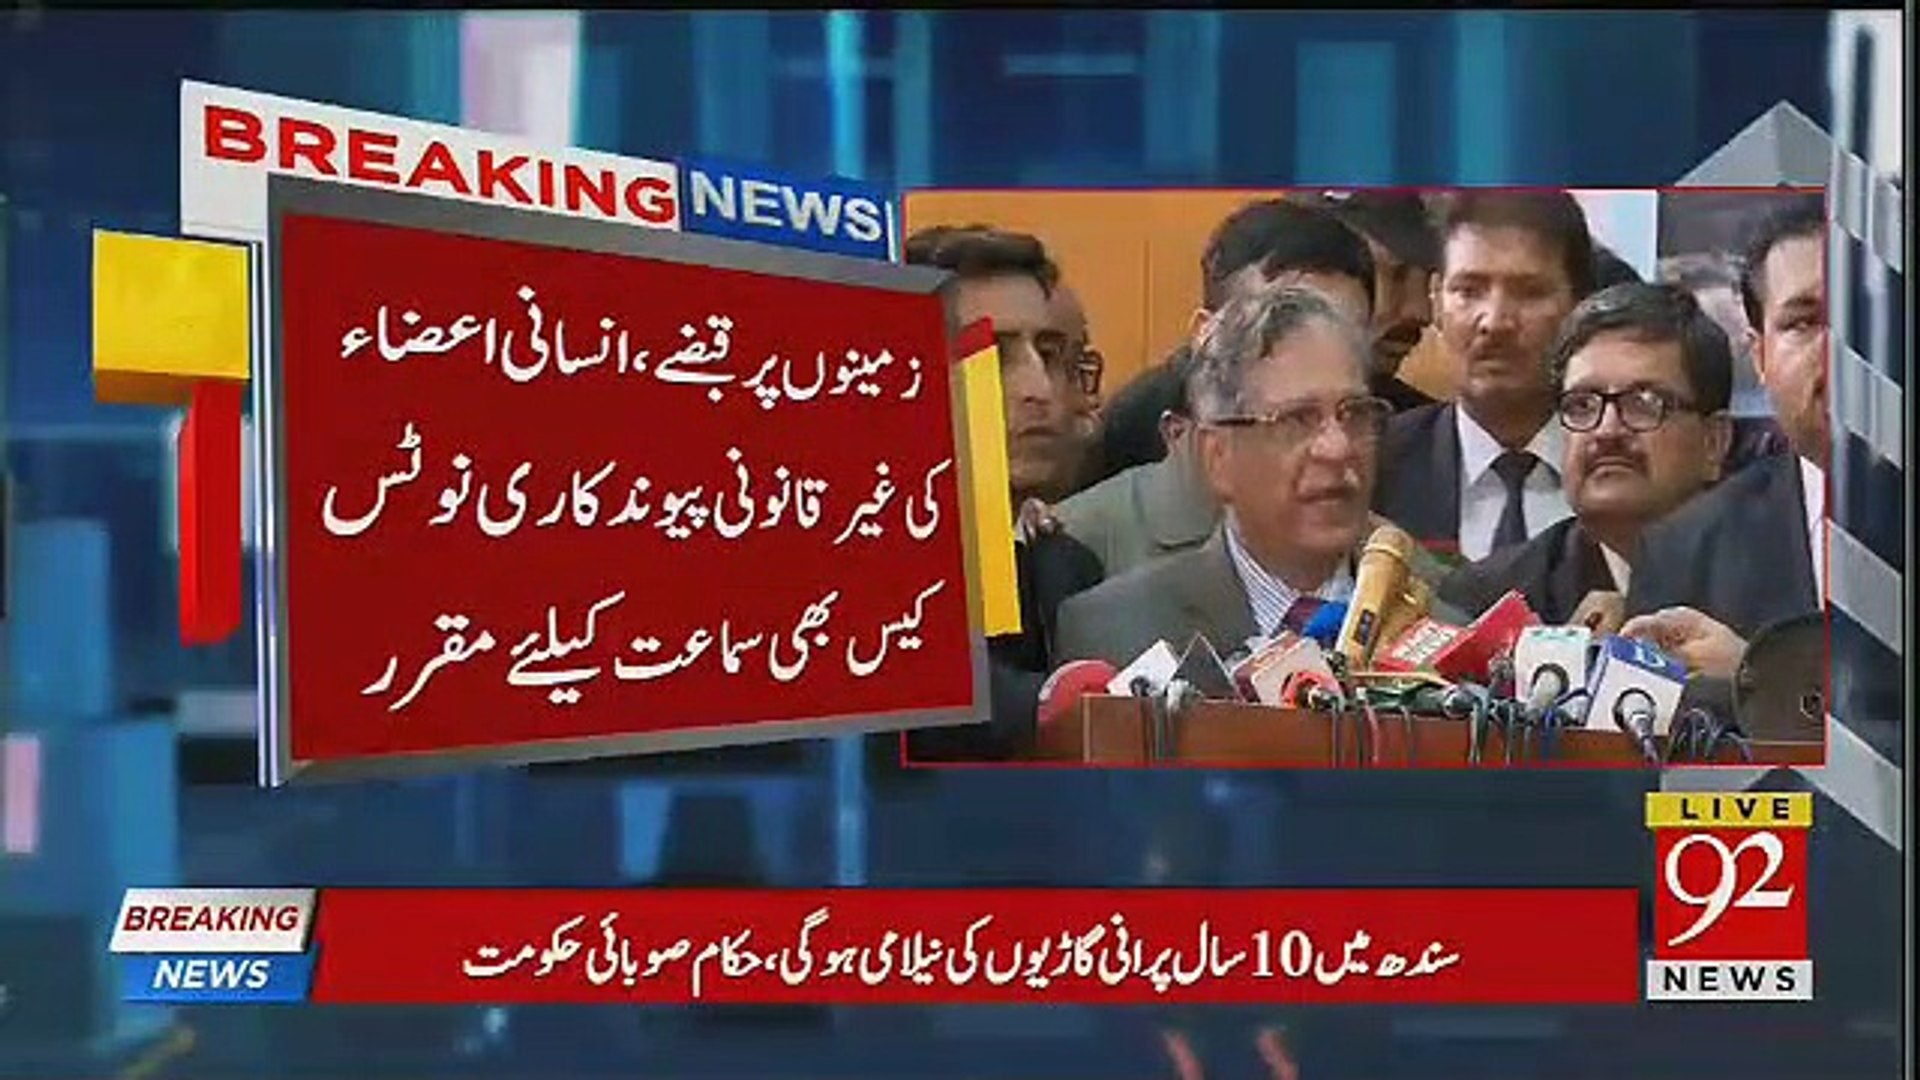 Breaking News Regarding Chief Justice of Pakistan